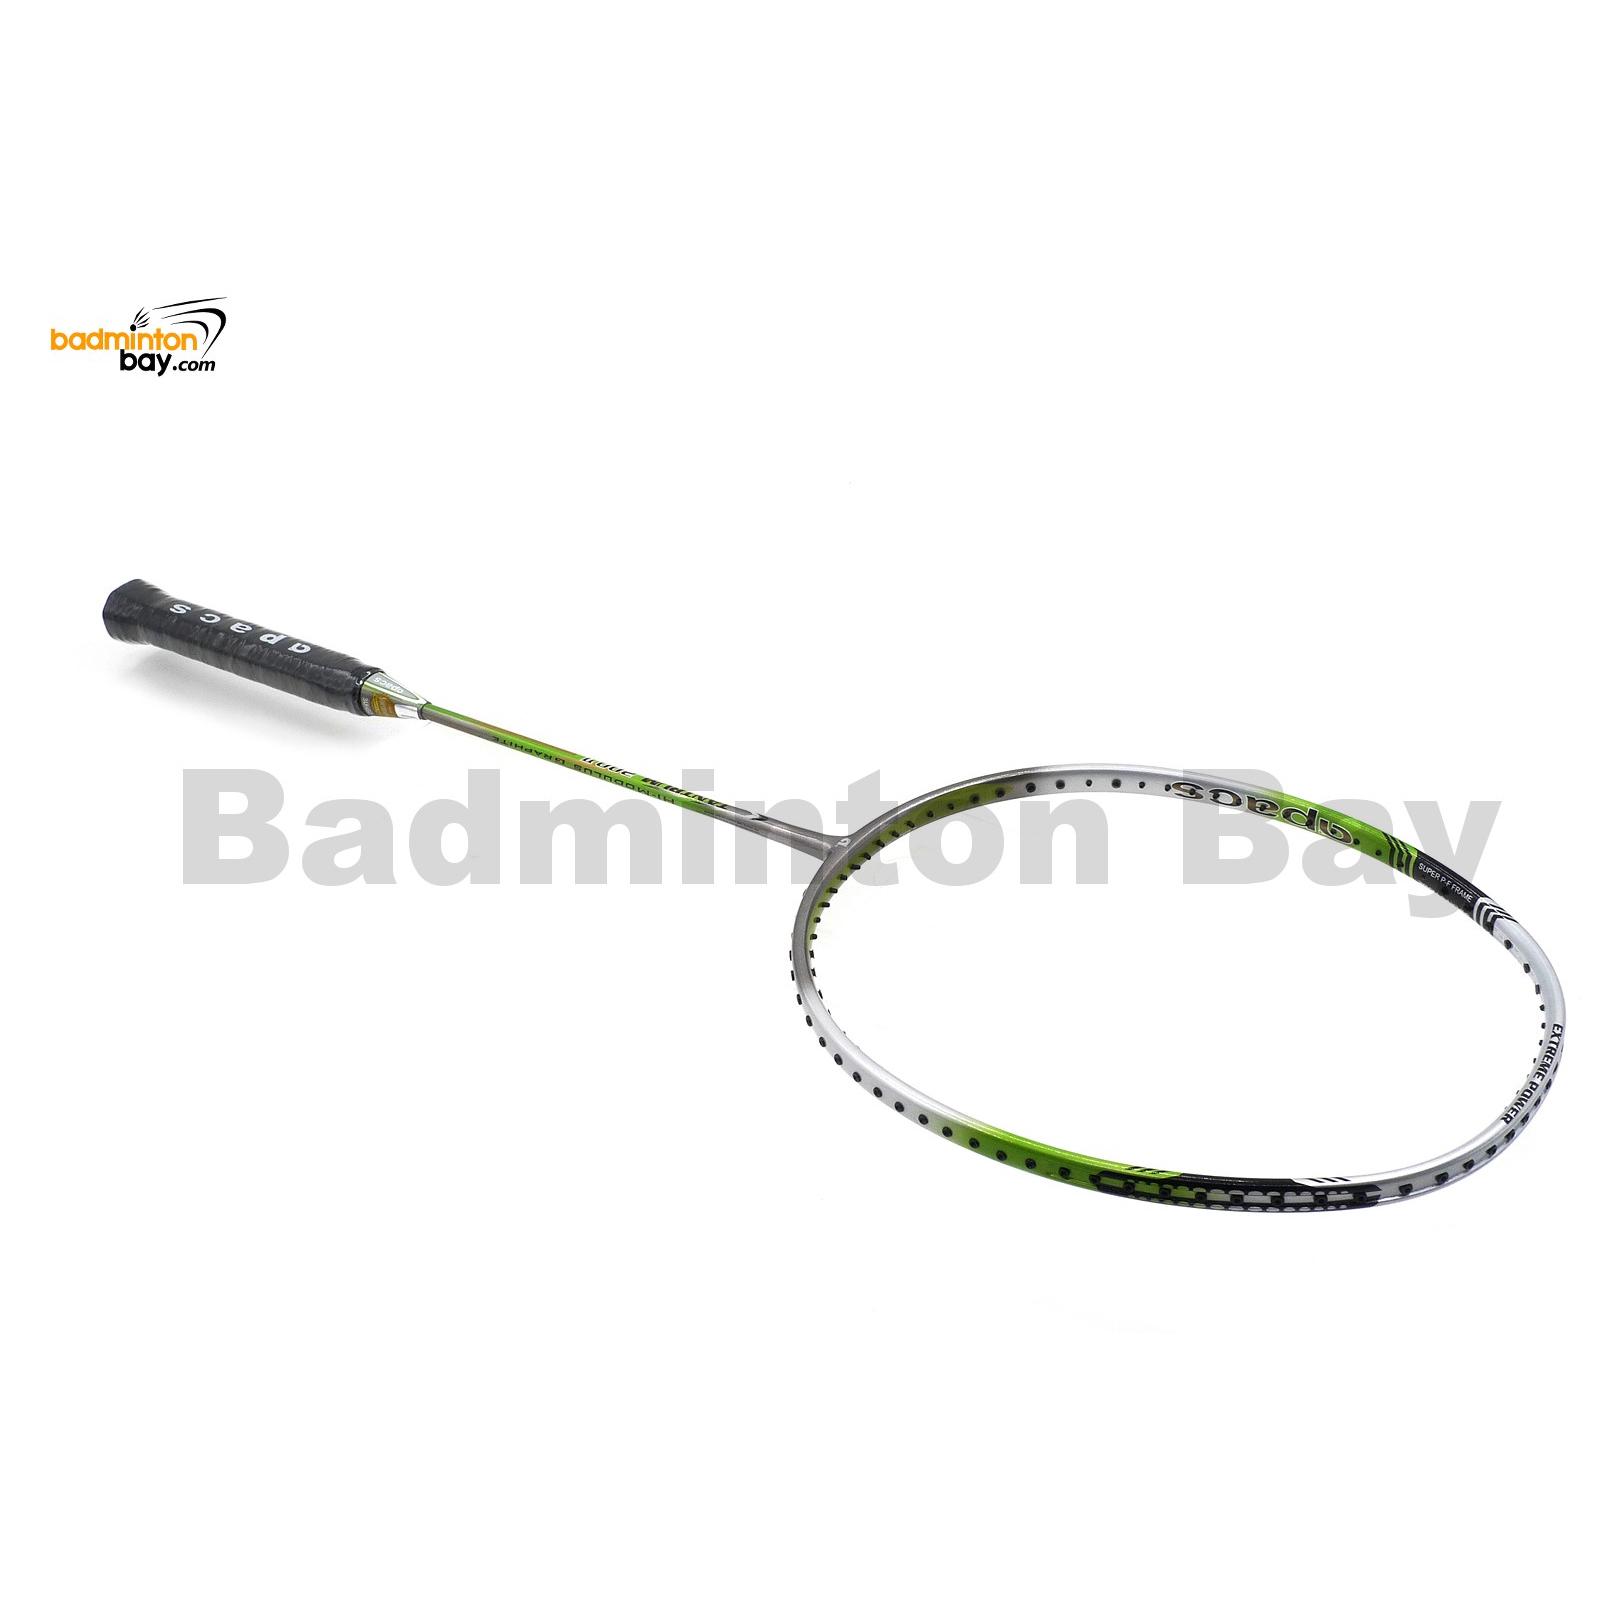 Apacs Tantrum 200 II Green Badminton Racket (3U)